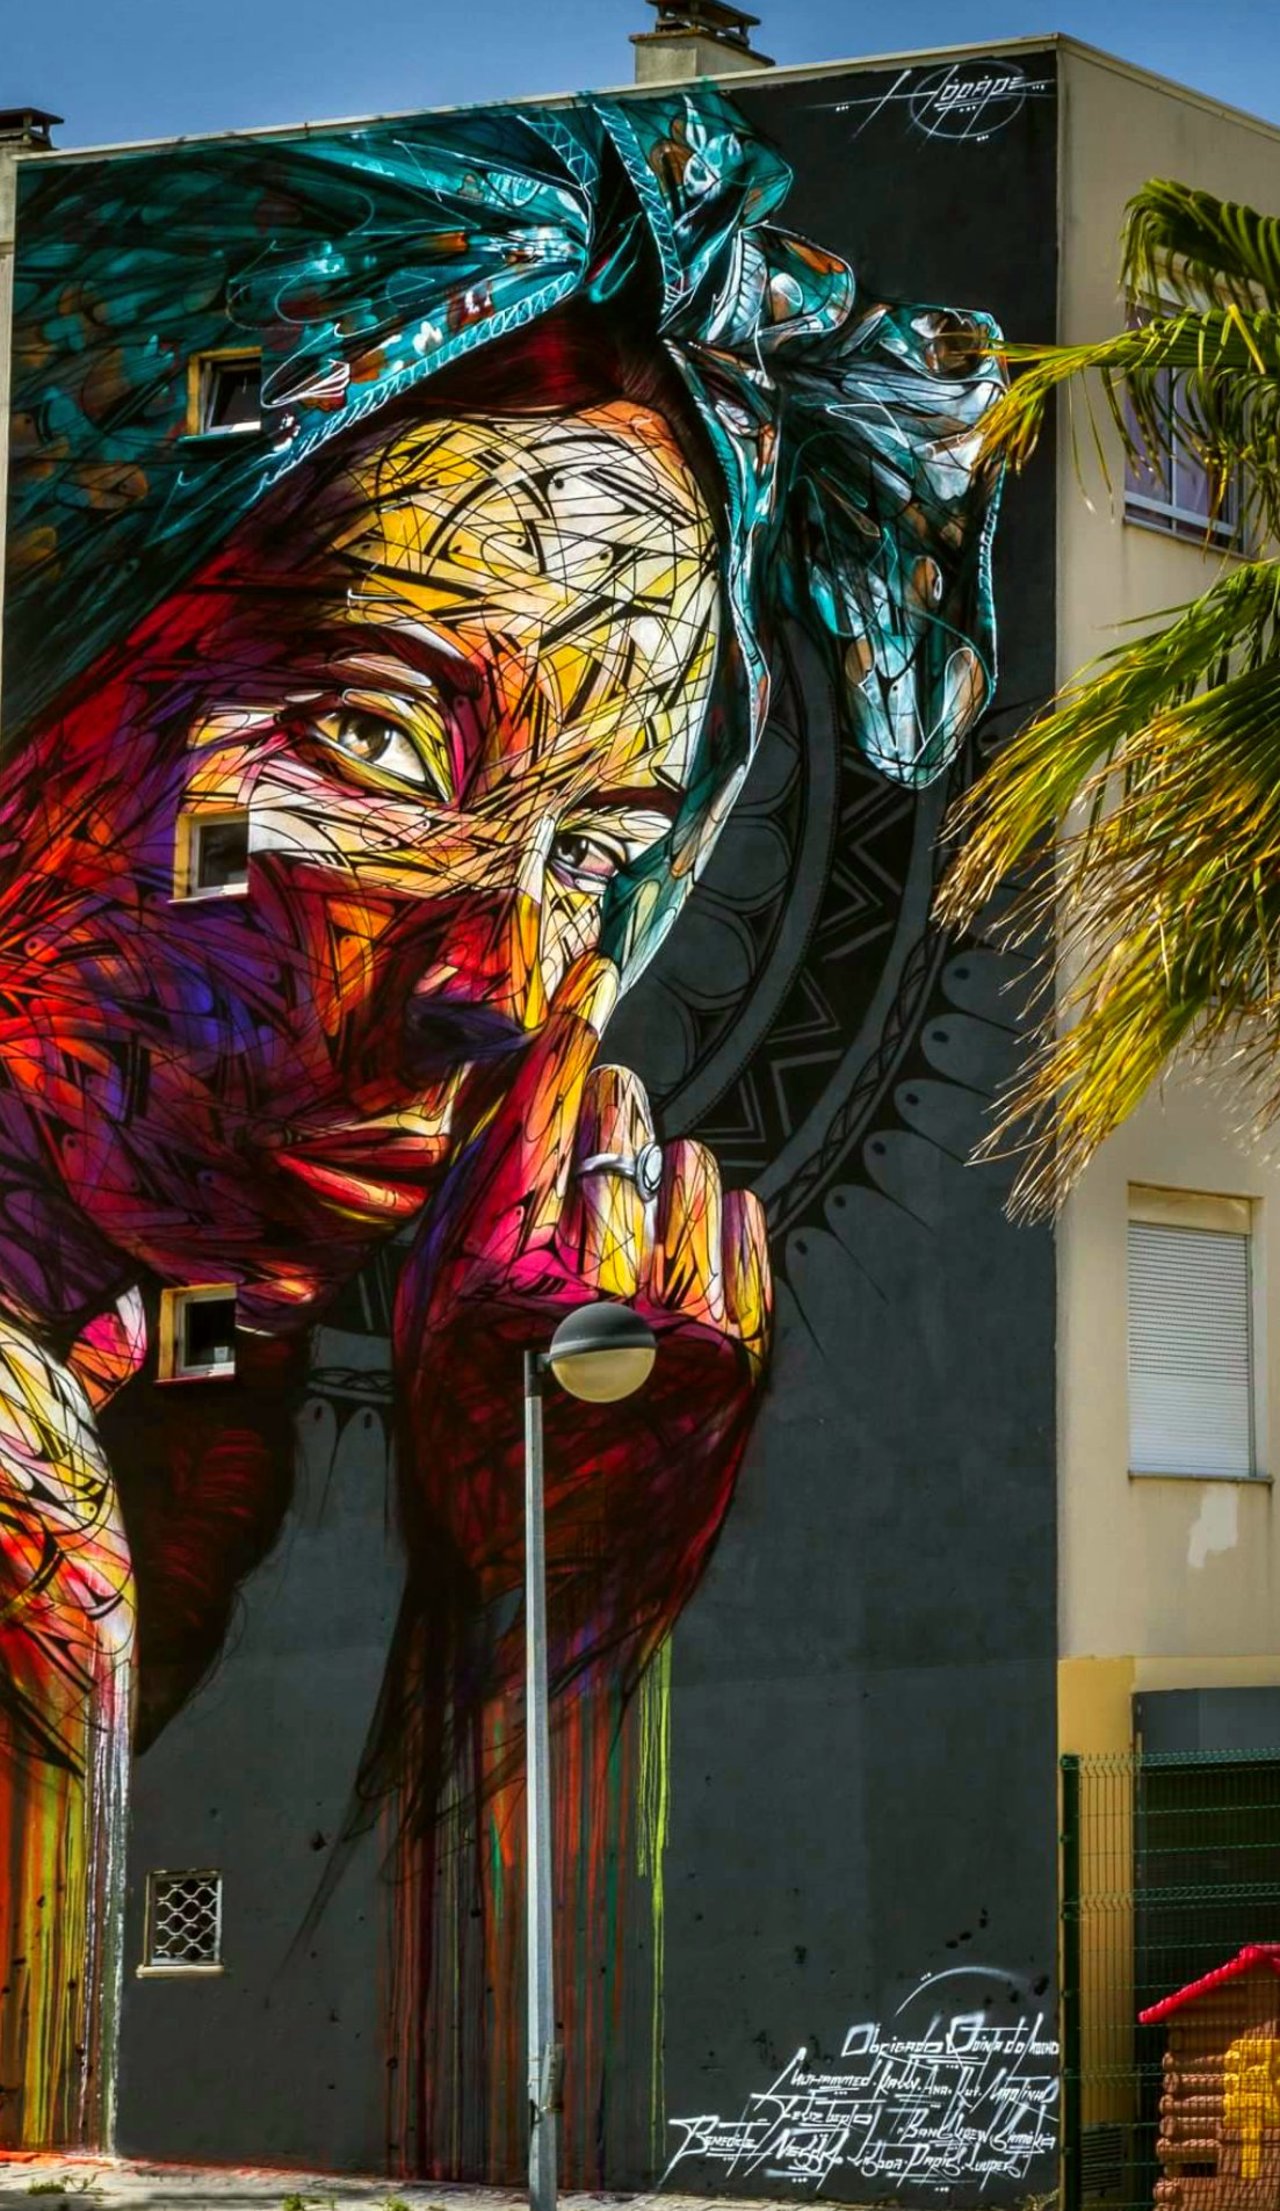 Amazing mural by @alexhopare in #loures #lisboa #streetart #art #contemporaryart https://t.co/Rjqi6g0hxk